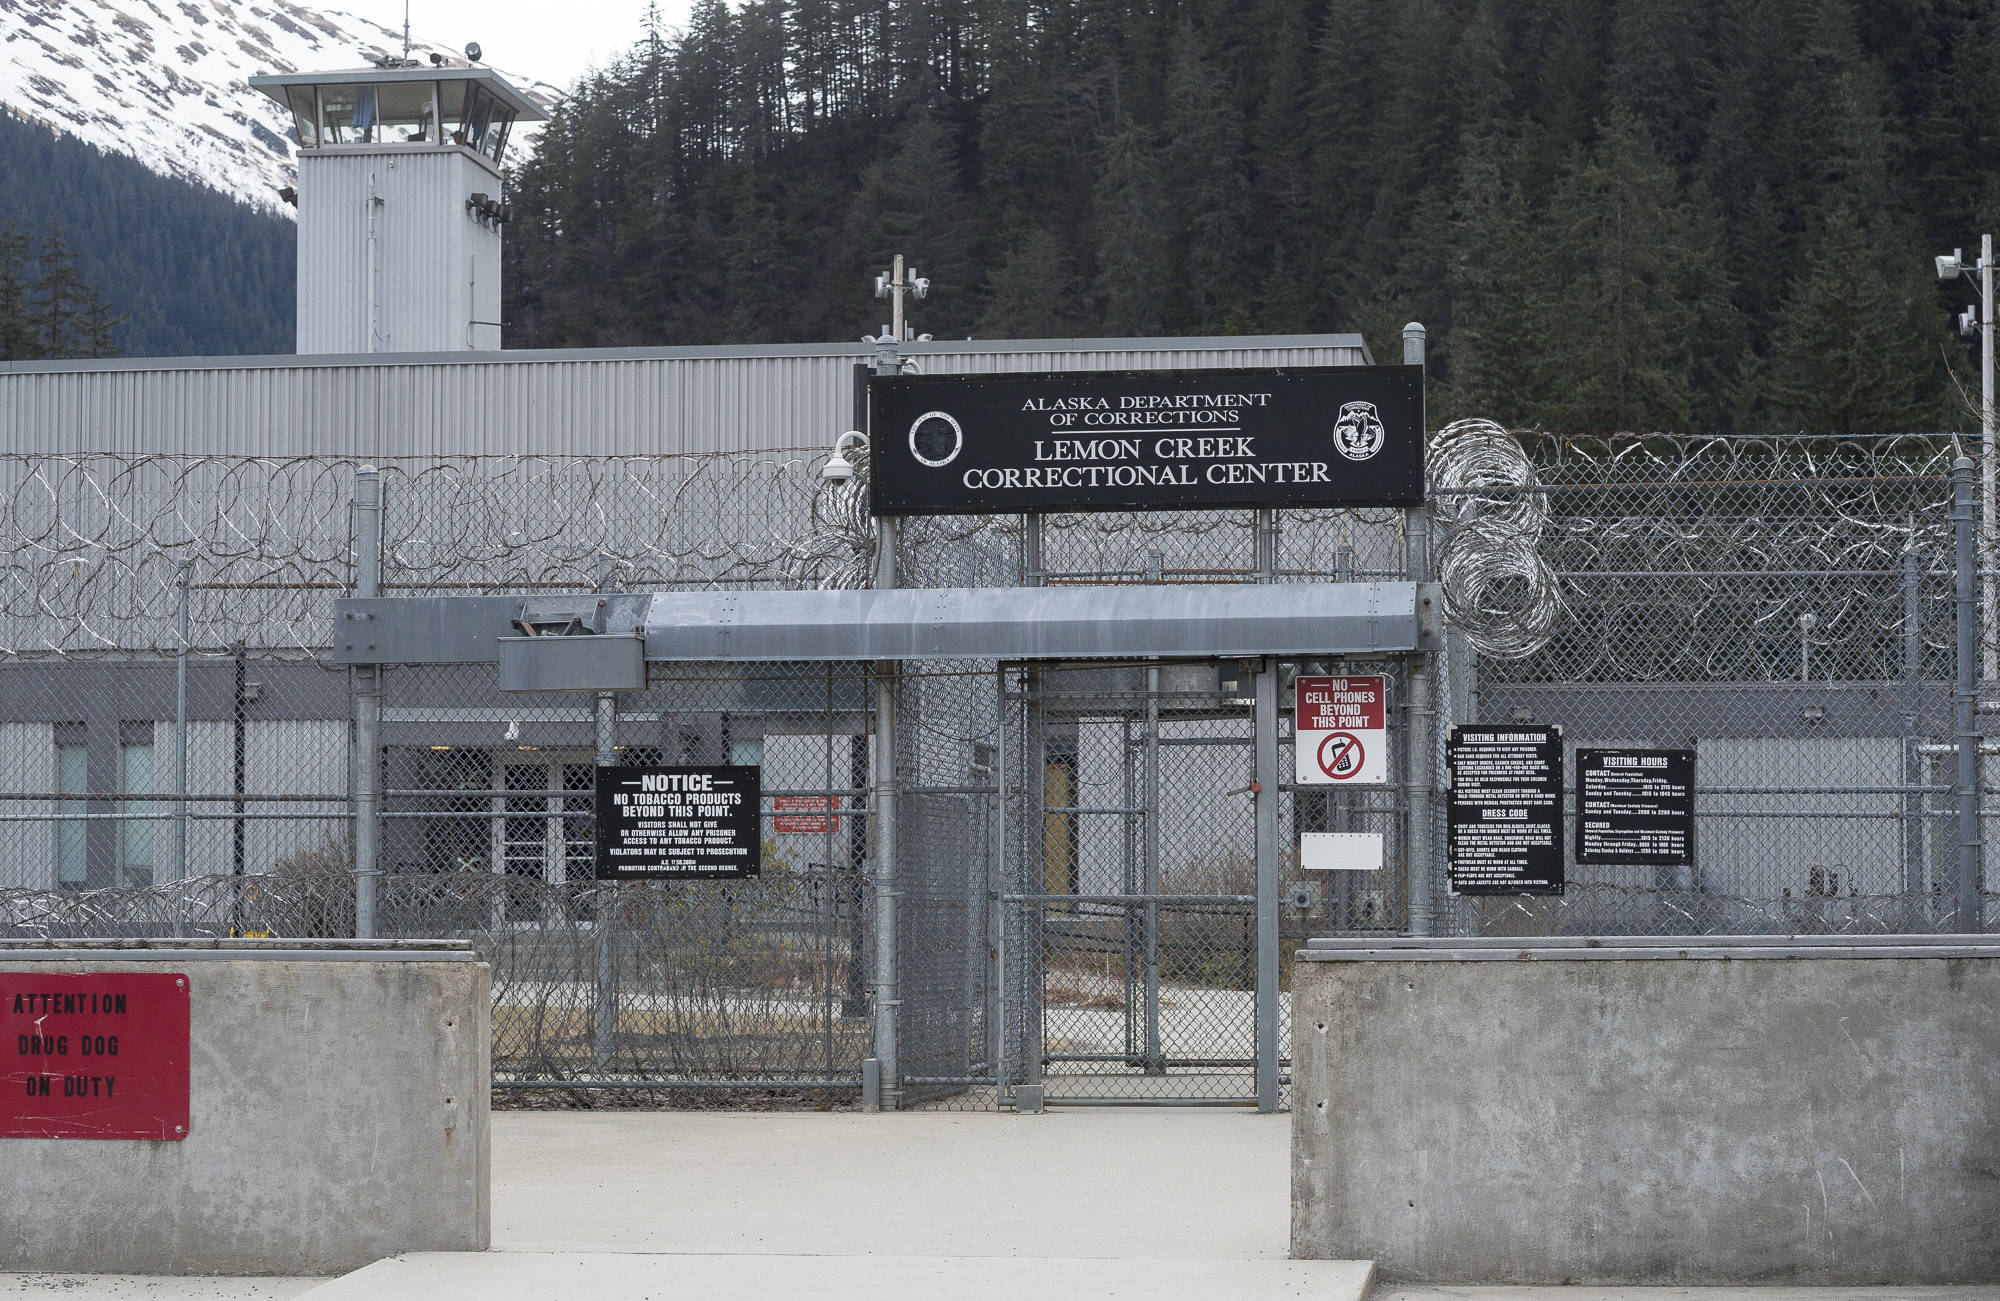 Lemon Creek Correctional Center pictured on Friday, April 13, 2018. (Michael Penn | Juneau Empire)